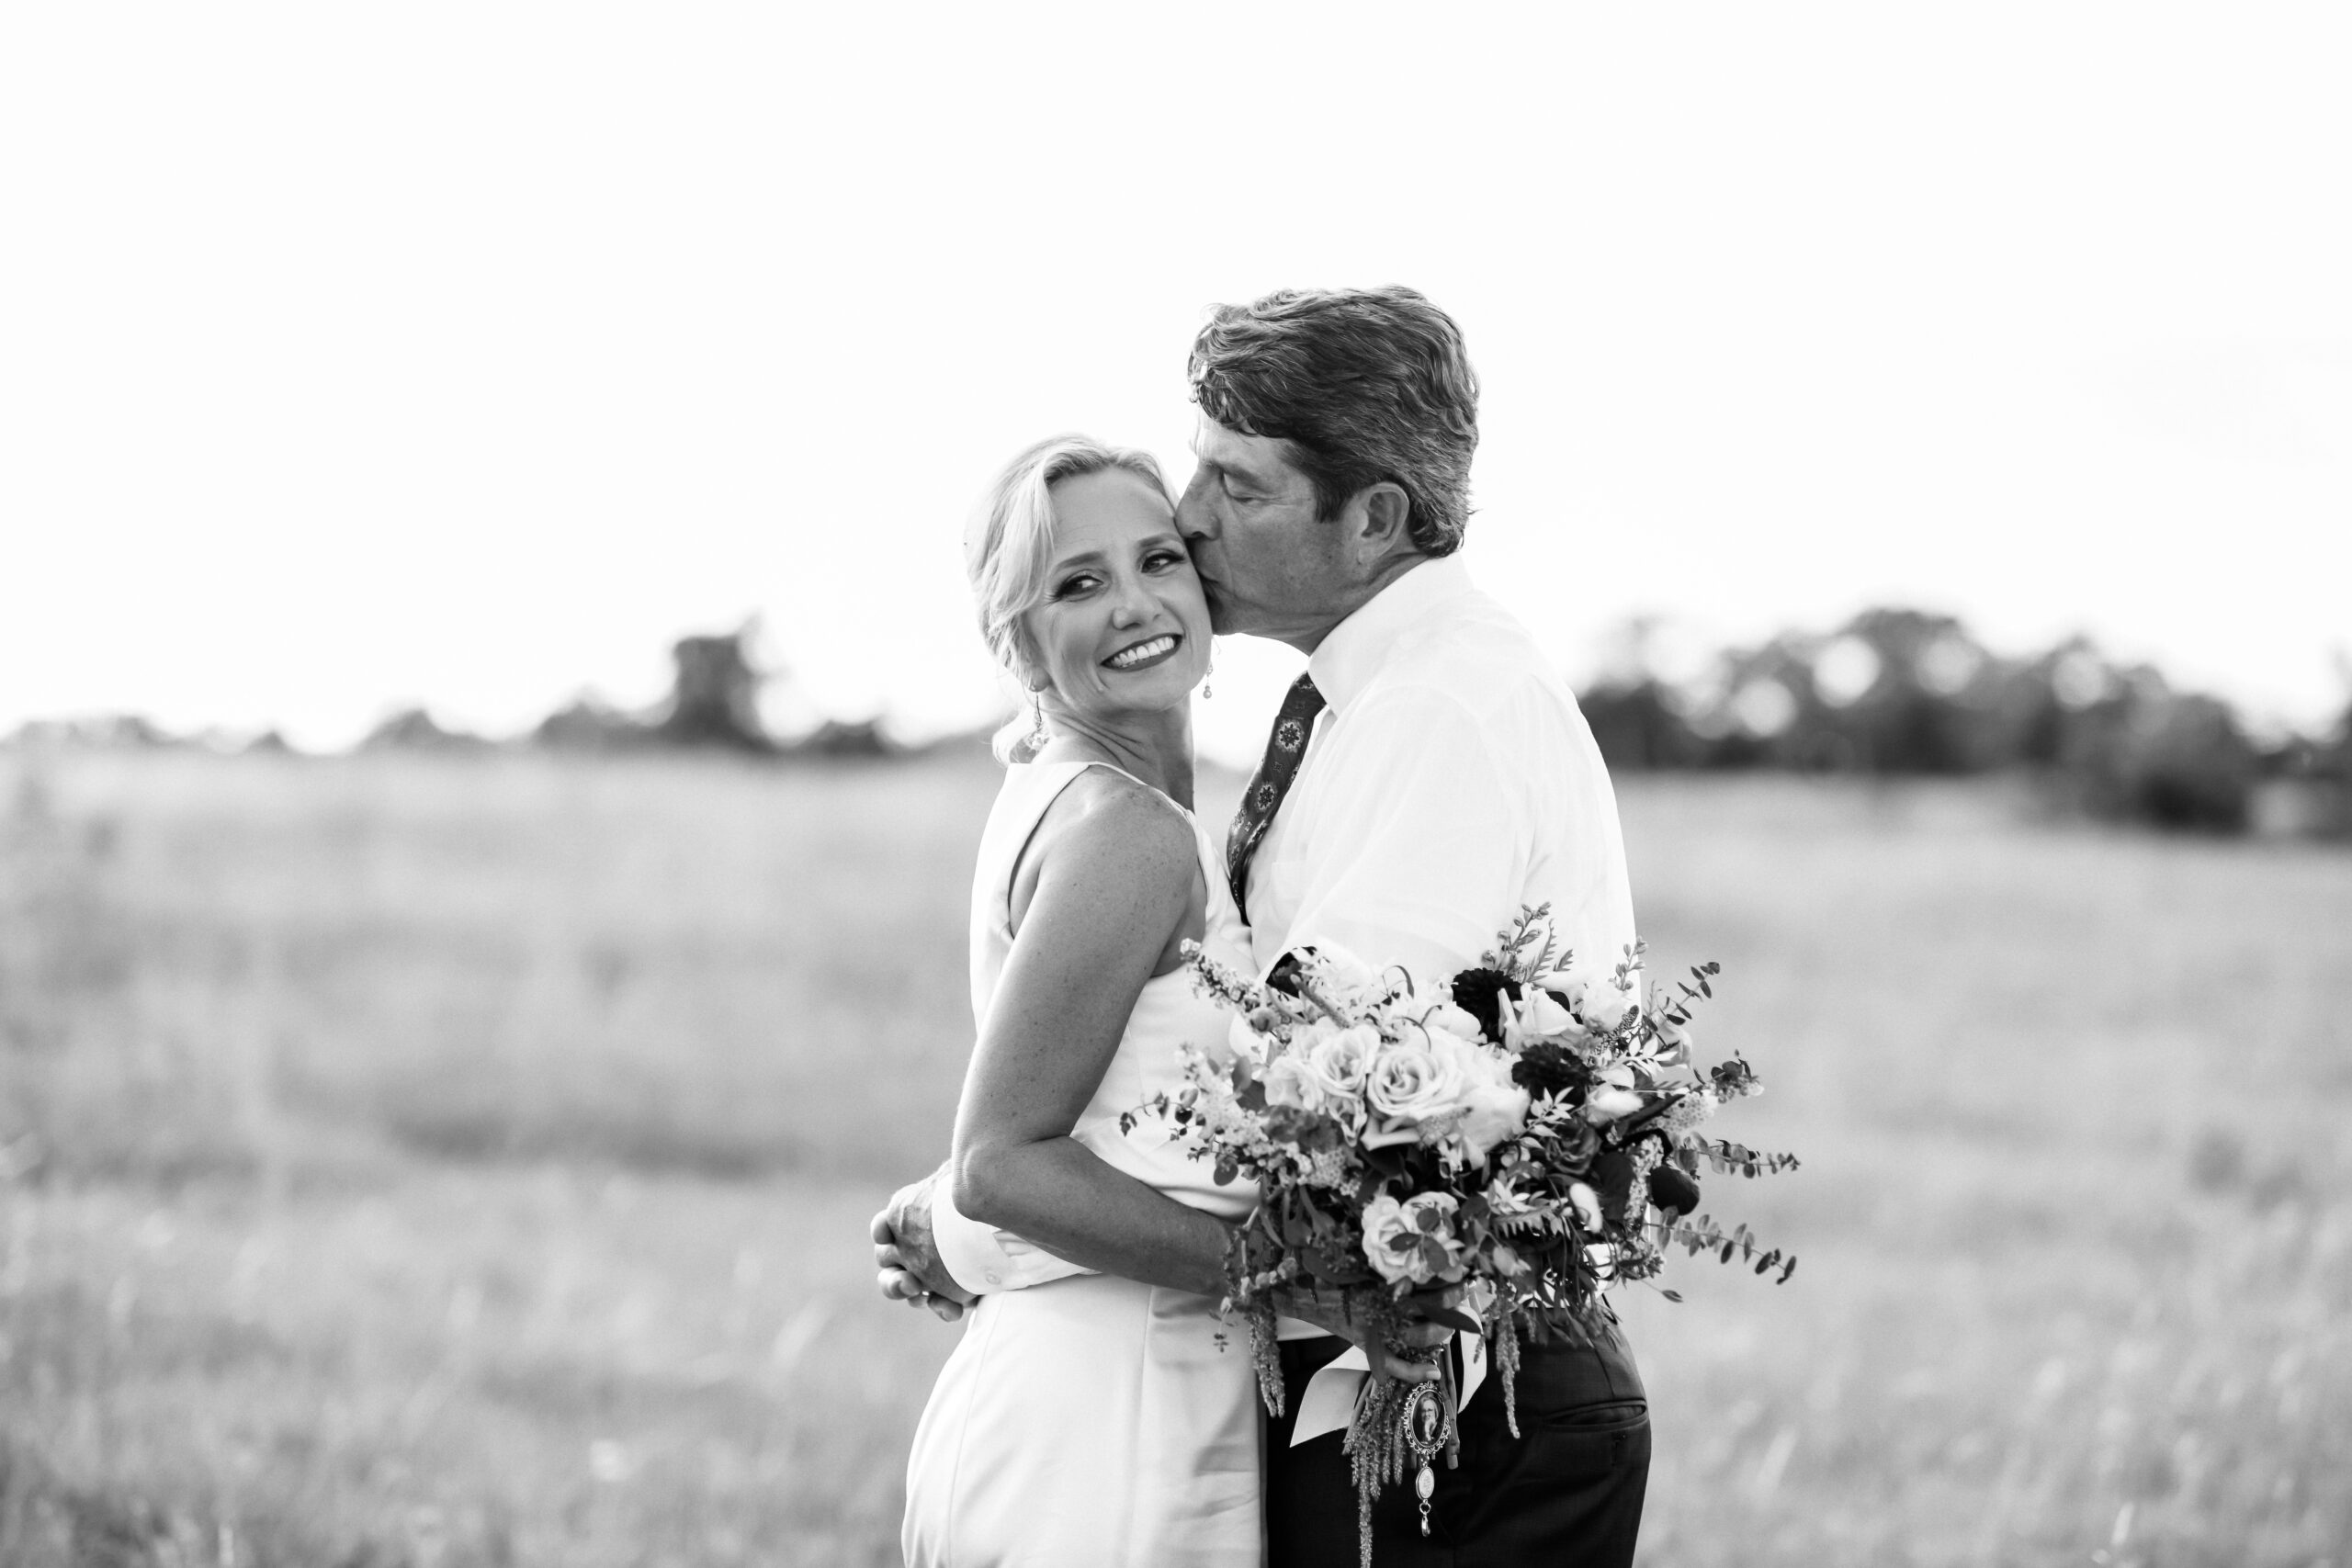 Shannon & Rex's Wedding in Brenham, TX with Rachel Driskell Photography